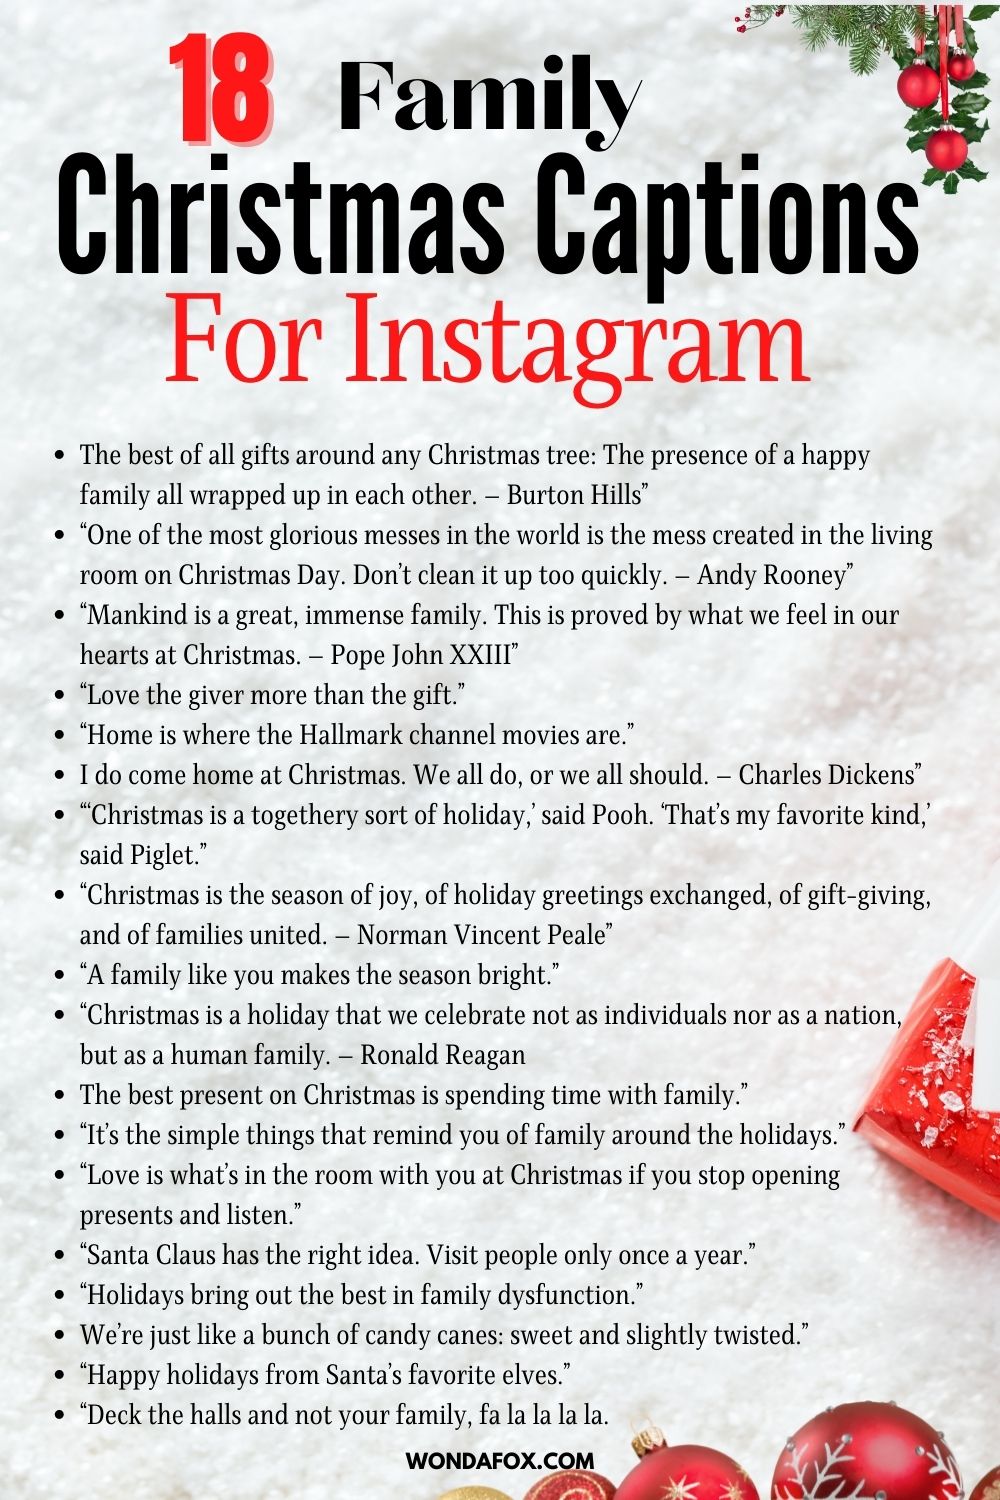 Family Christmas Captions For Instagram